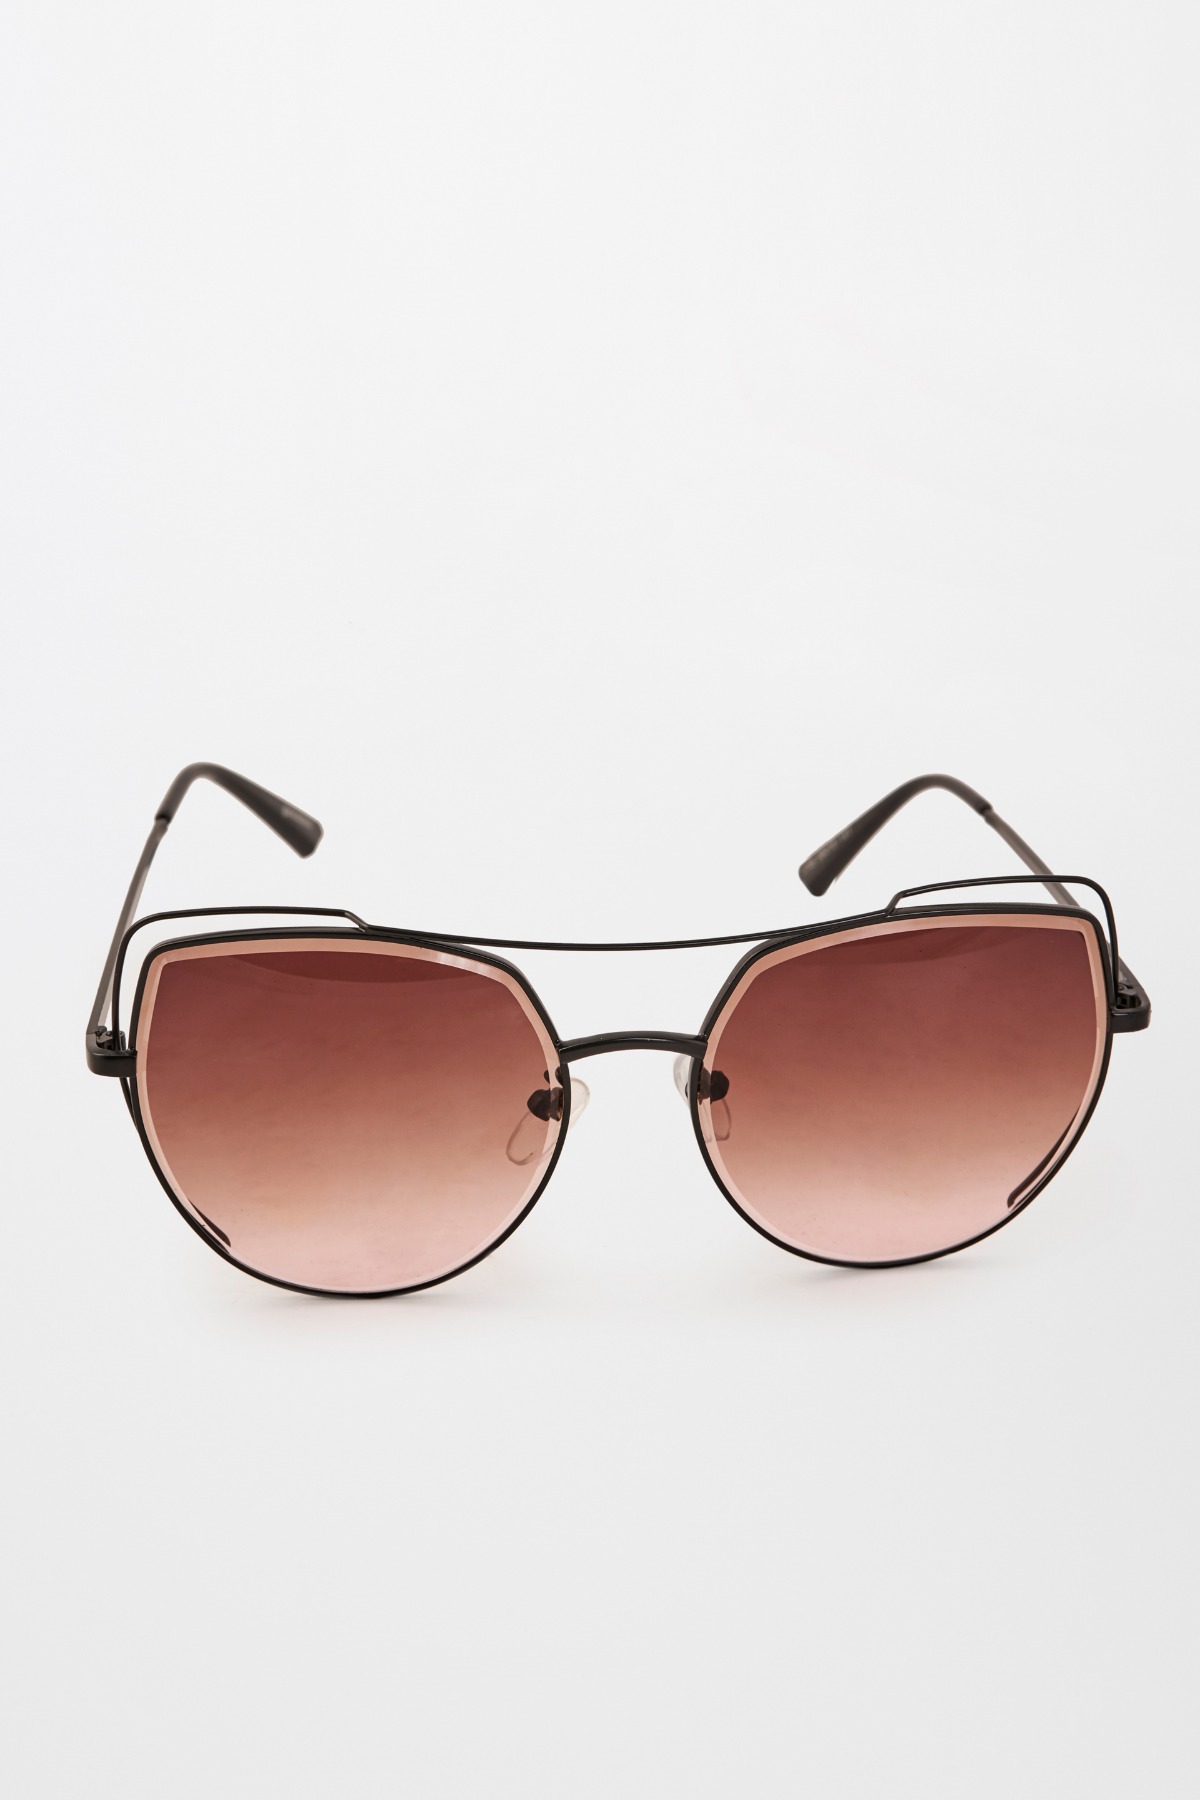 Amazon.com: Polarized Sunglasses For Women Men Teens Girls Boys Guys  Driving 80s Matte Black : Clothing, Shoes & Jewelry